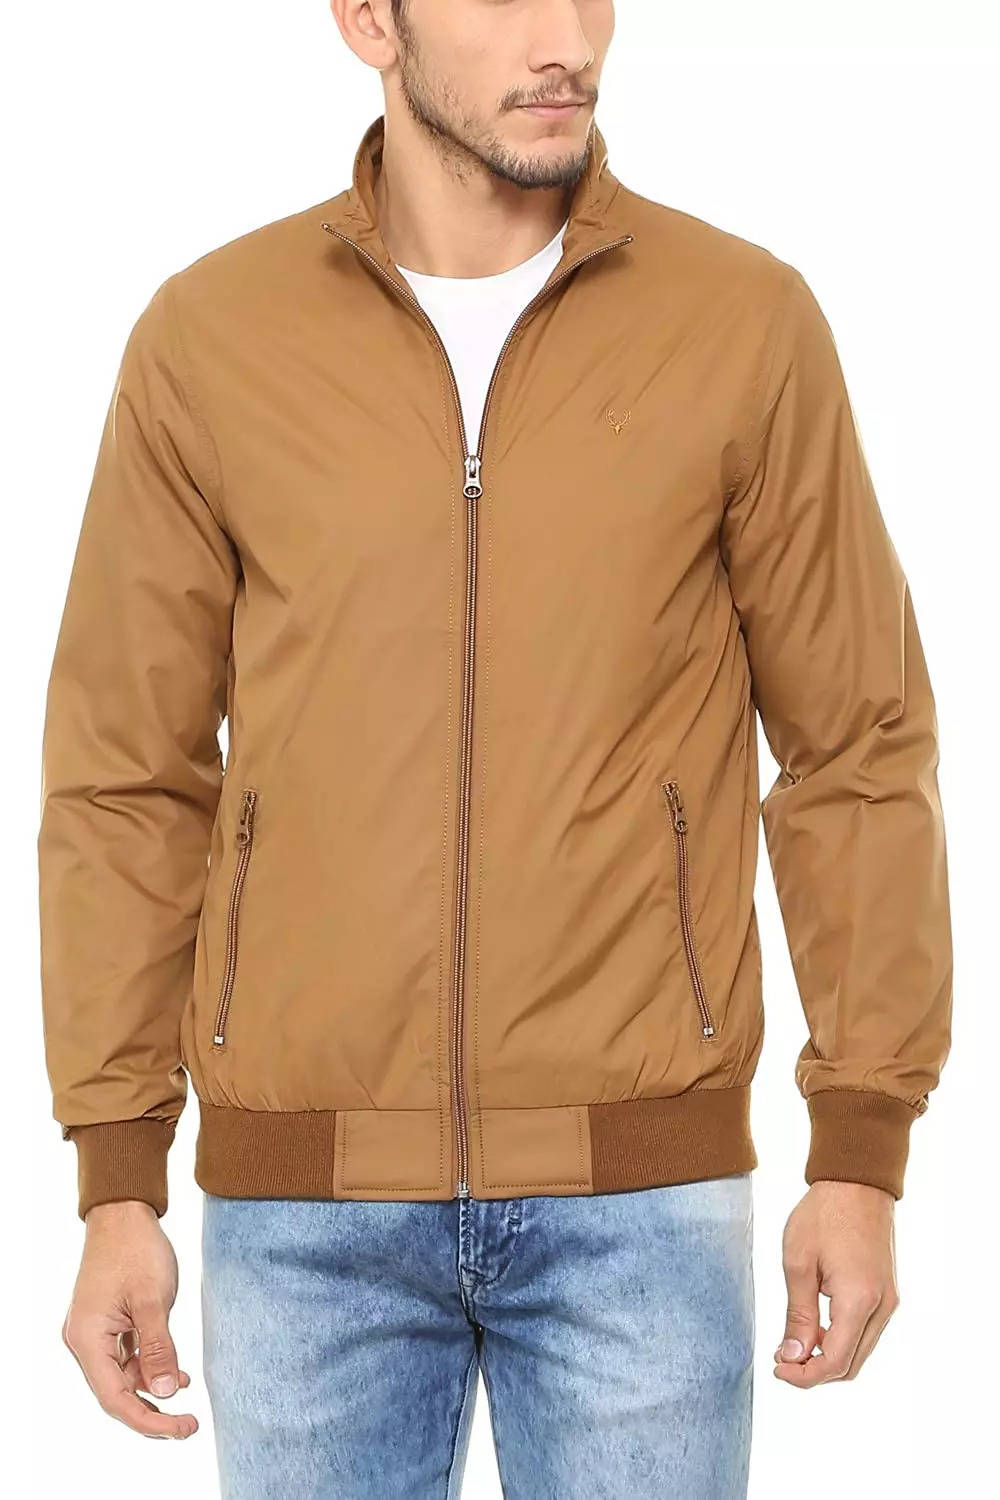 Buy Solid Men's Denim Jacket (Large) at Amazon.in